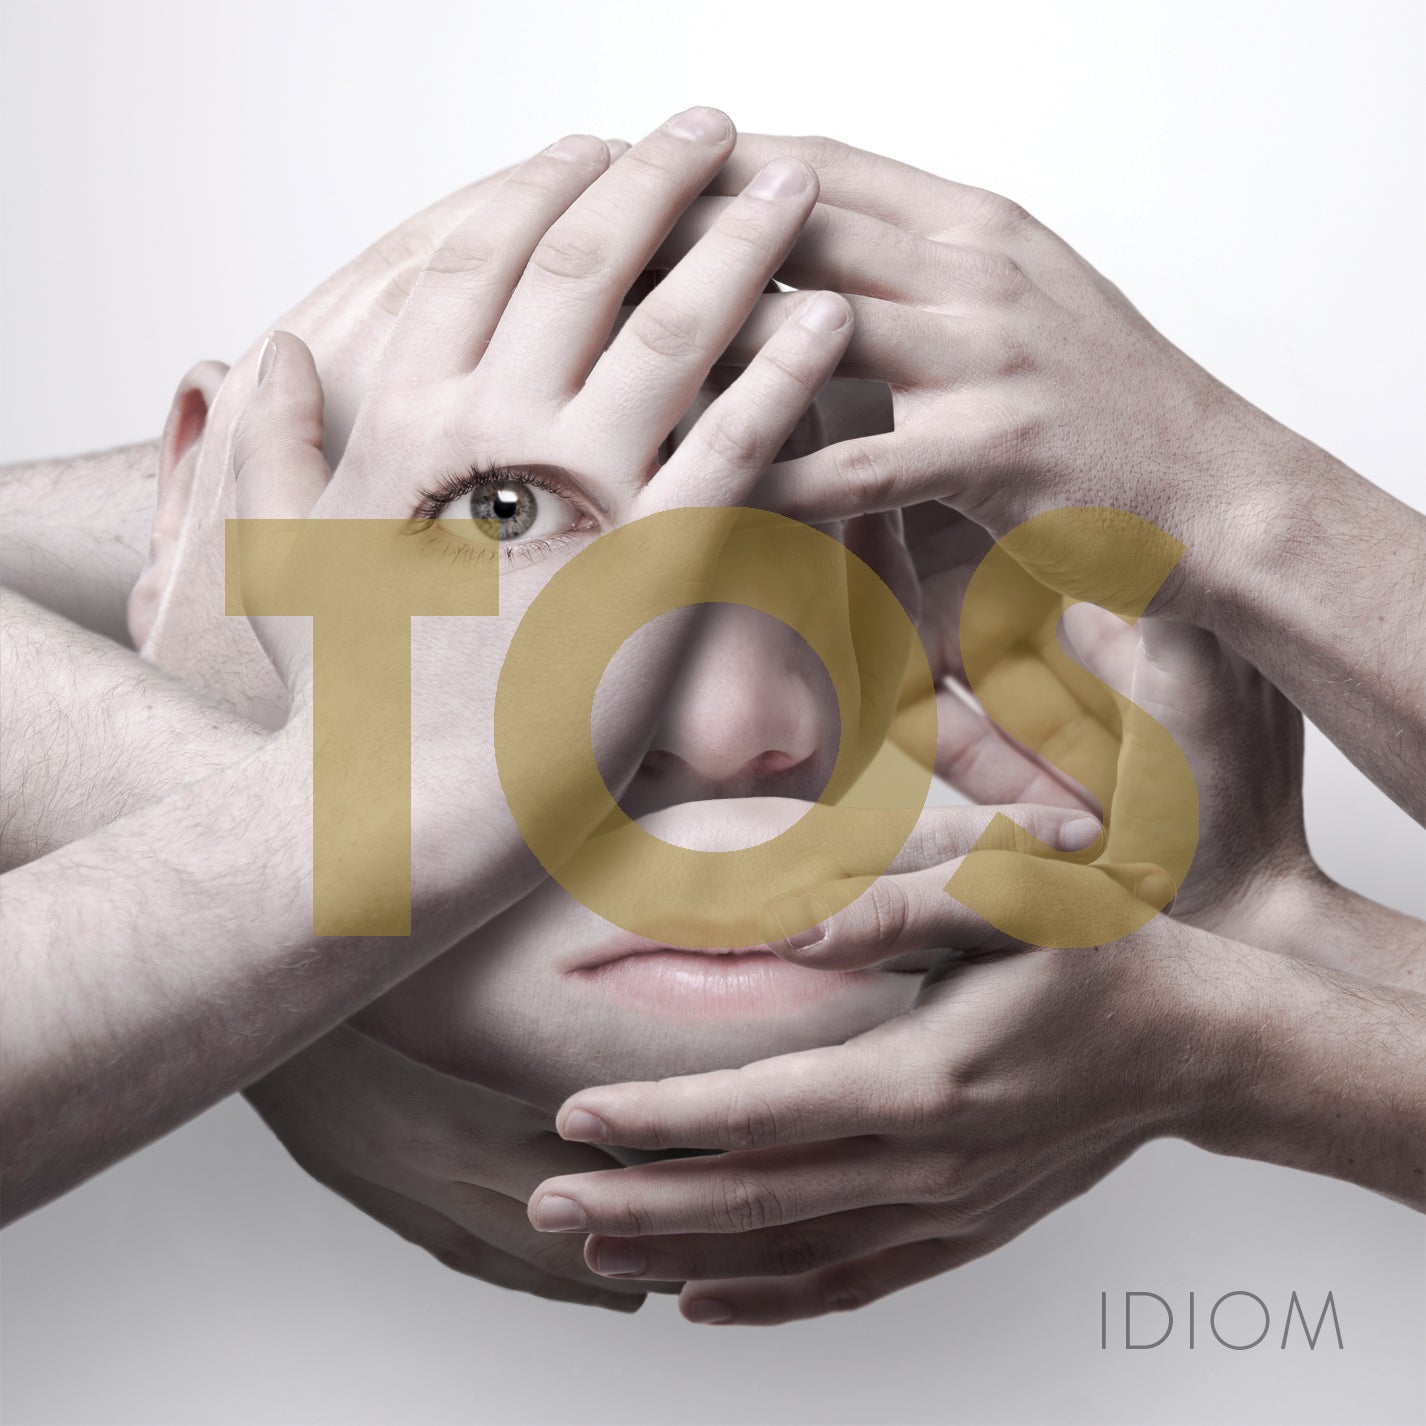 TOS - Idiom (CD)